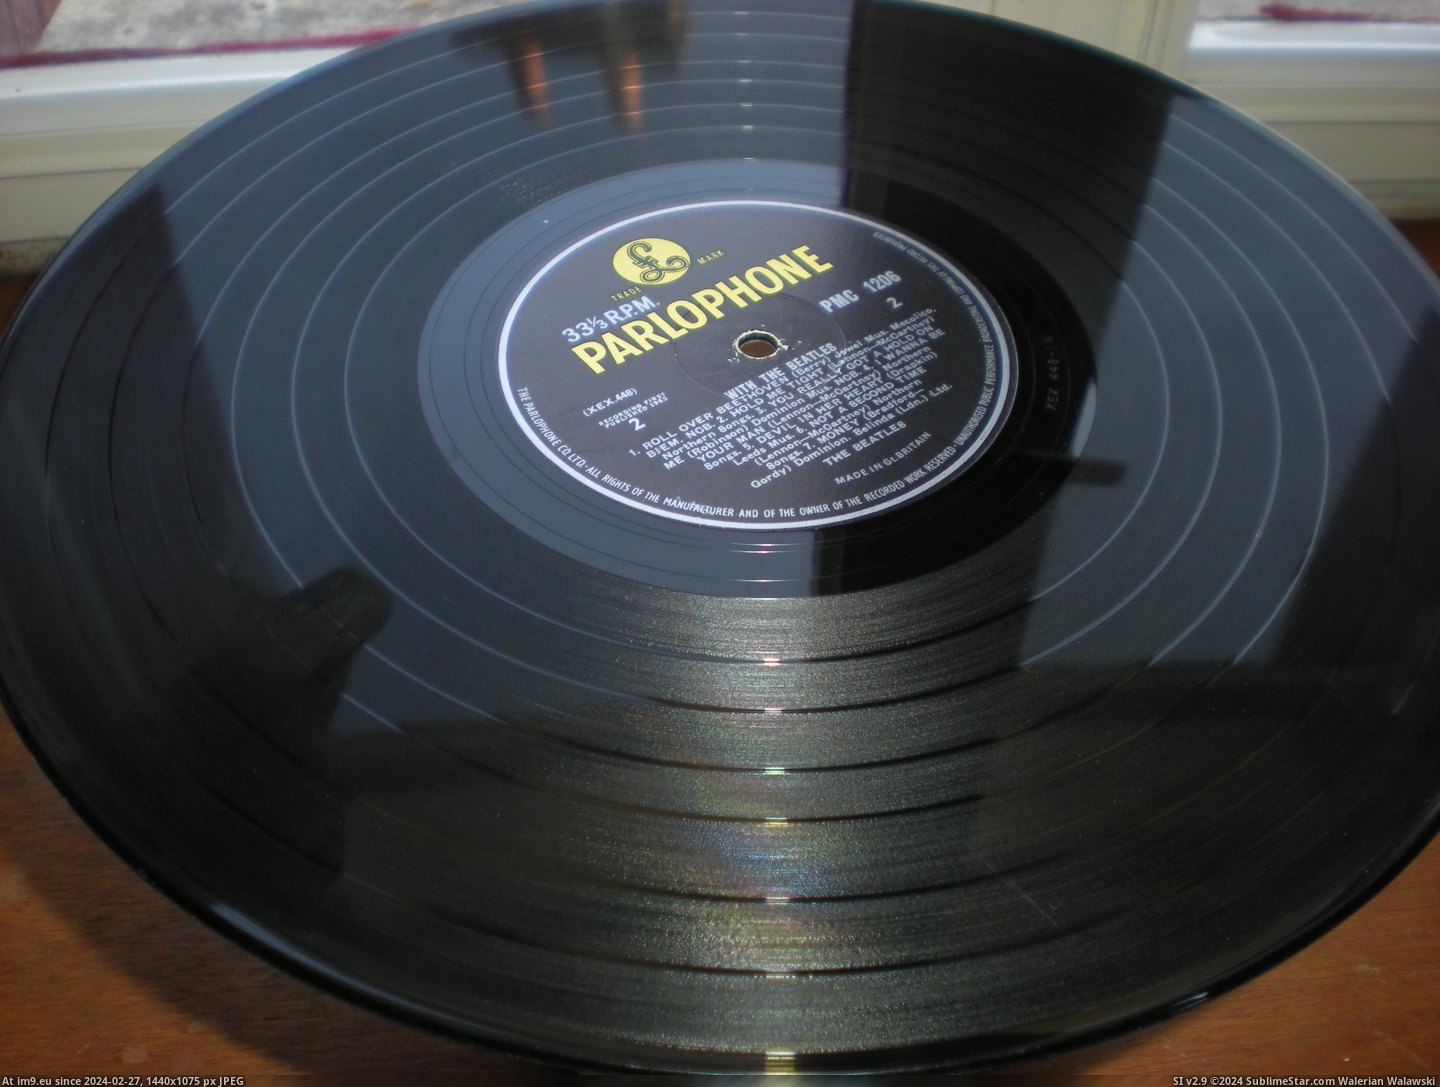 #Records #Vinyl #Record With The 22-8 4 Pic. (Изображение из альбом new 1))